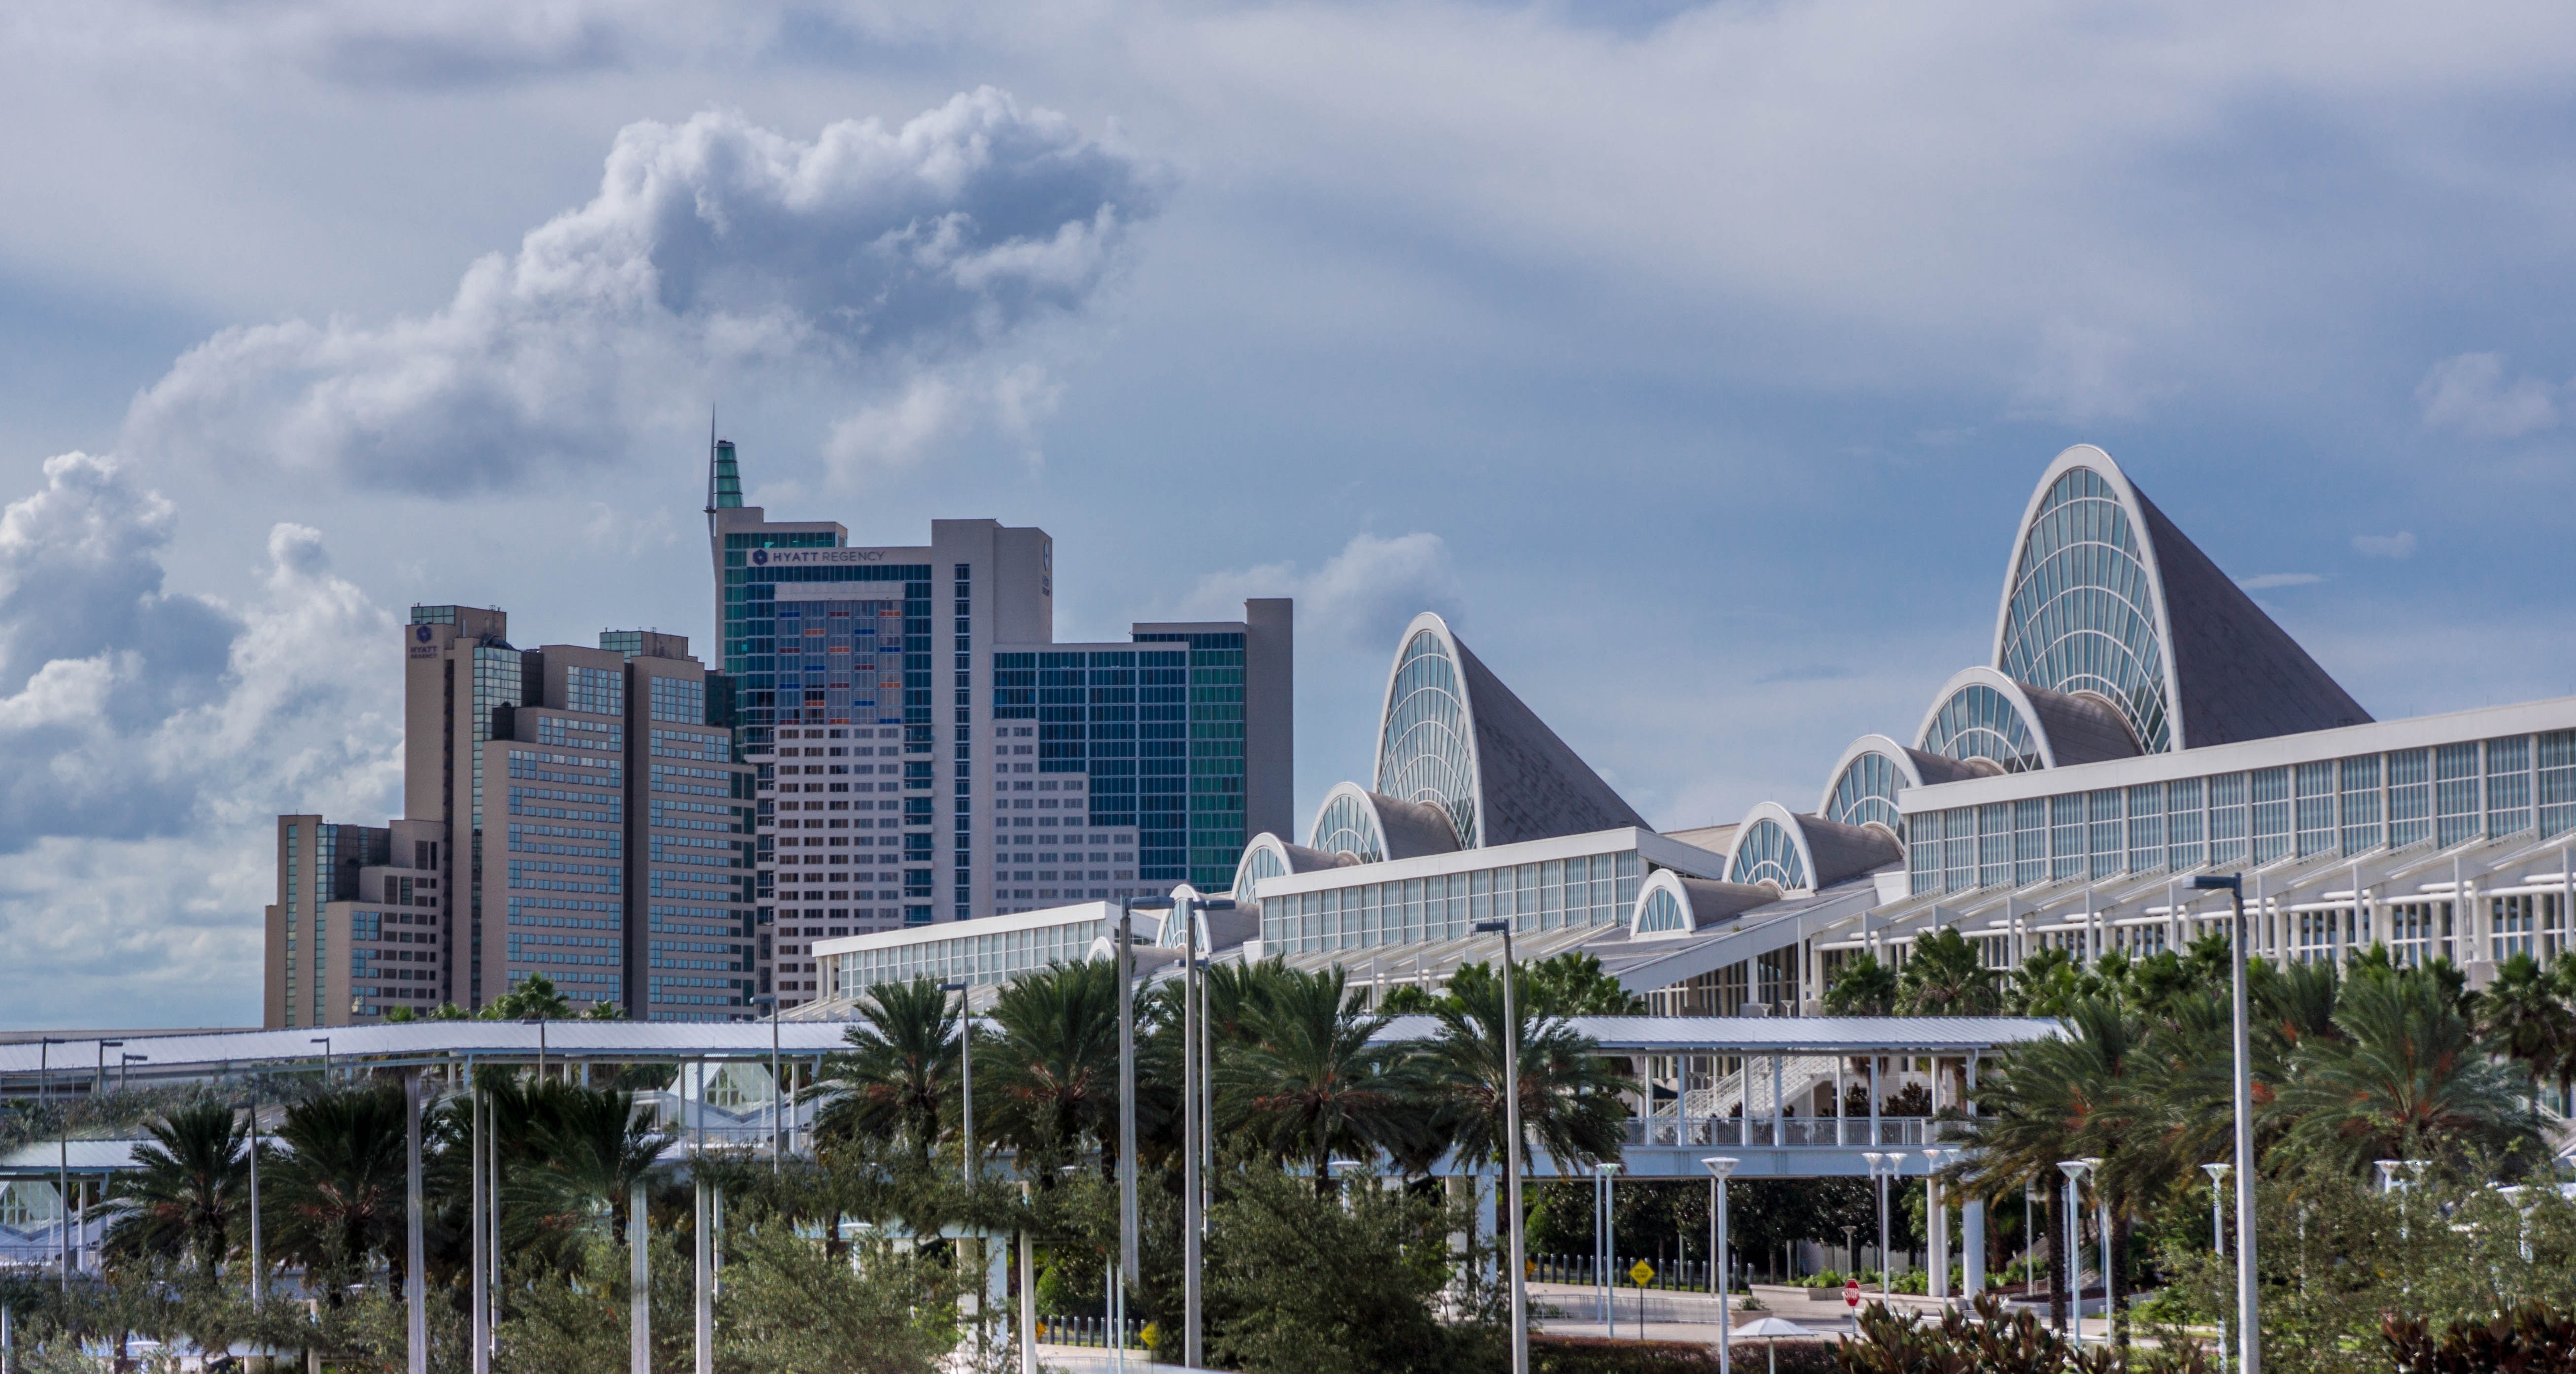 Orlando, Sky, Florida, Architecture, modern, cloud - sky